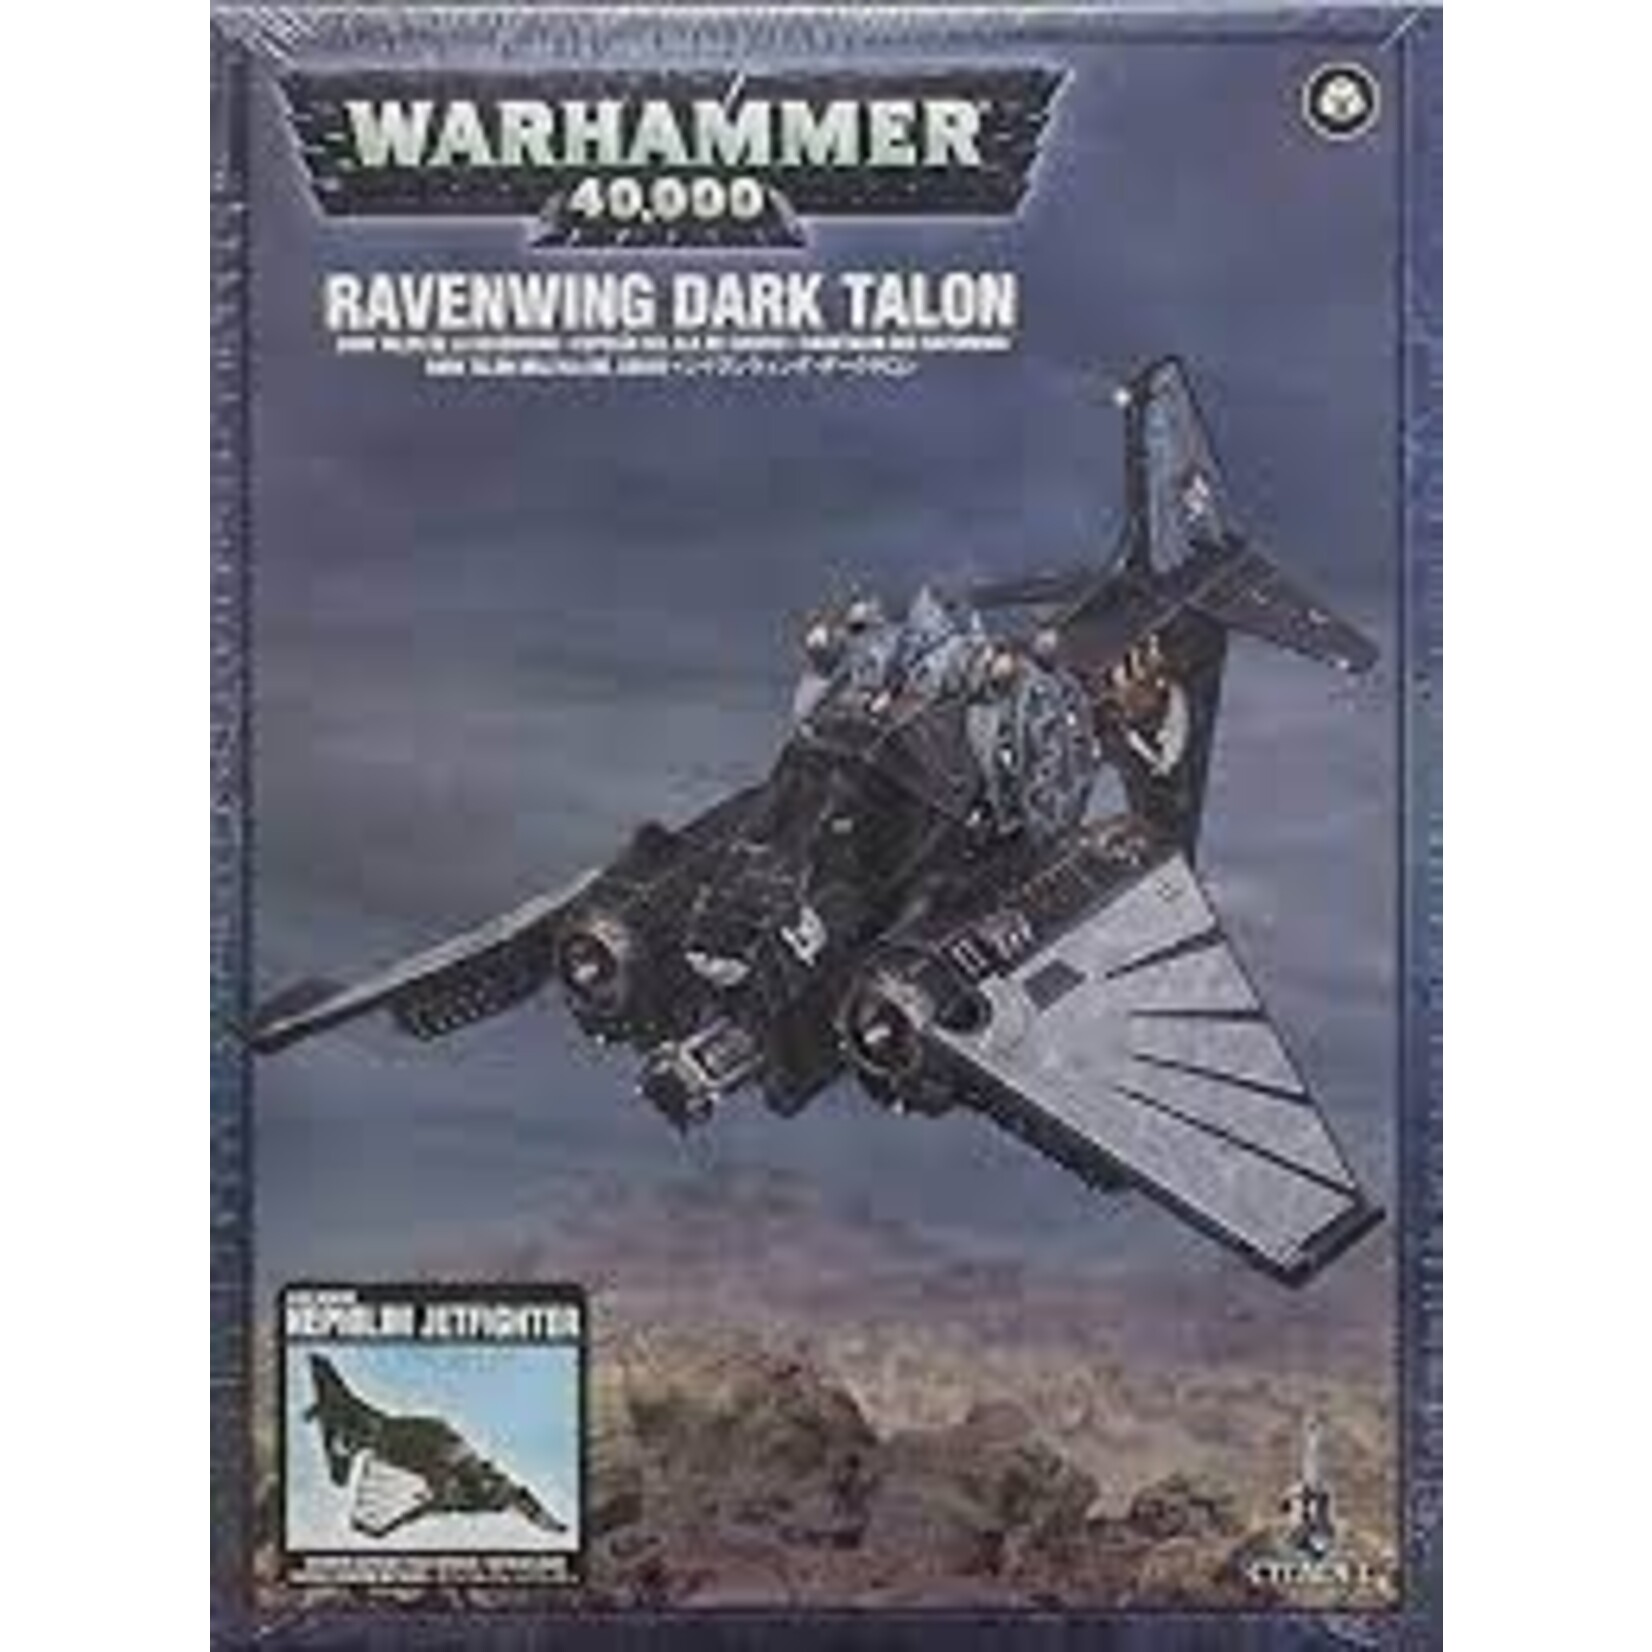 Ravenwing Dark Talon or Nephilim Jetfighter